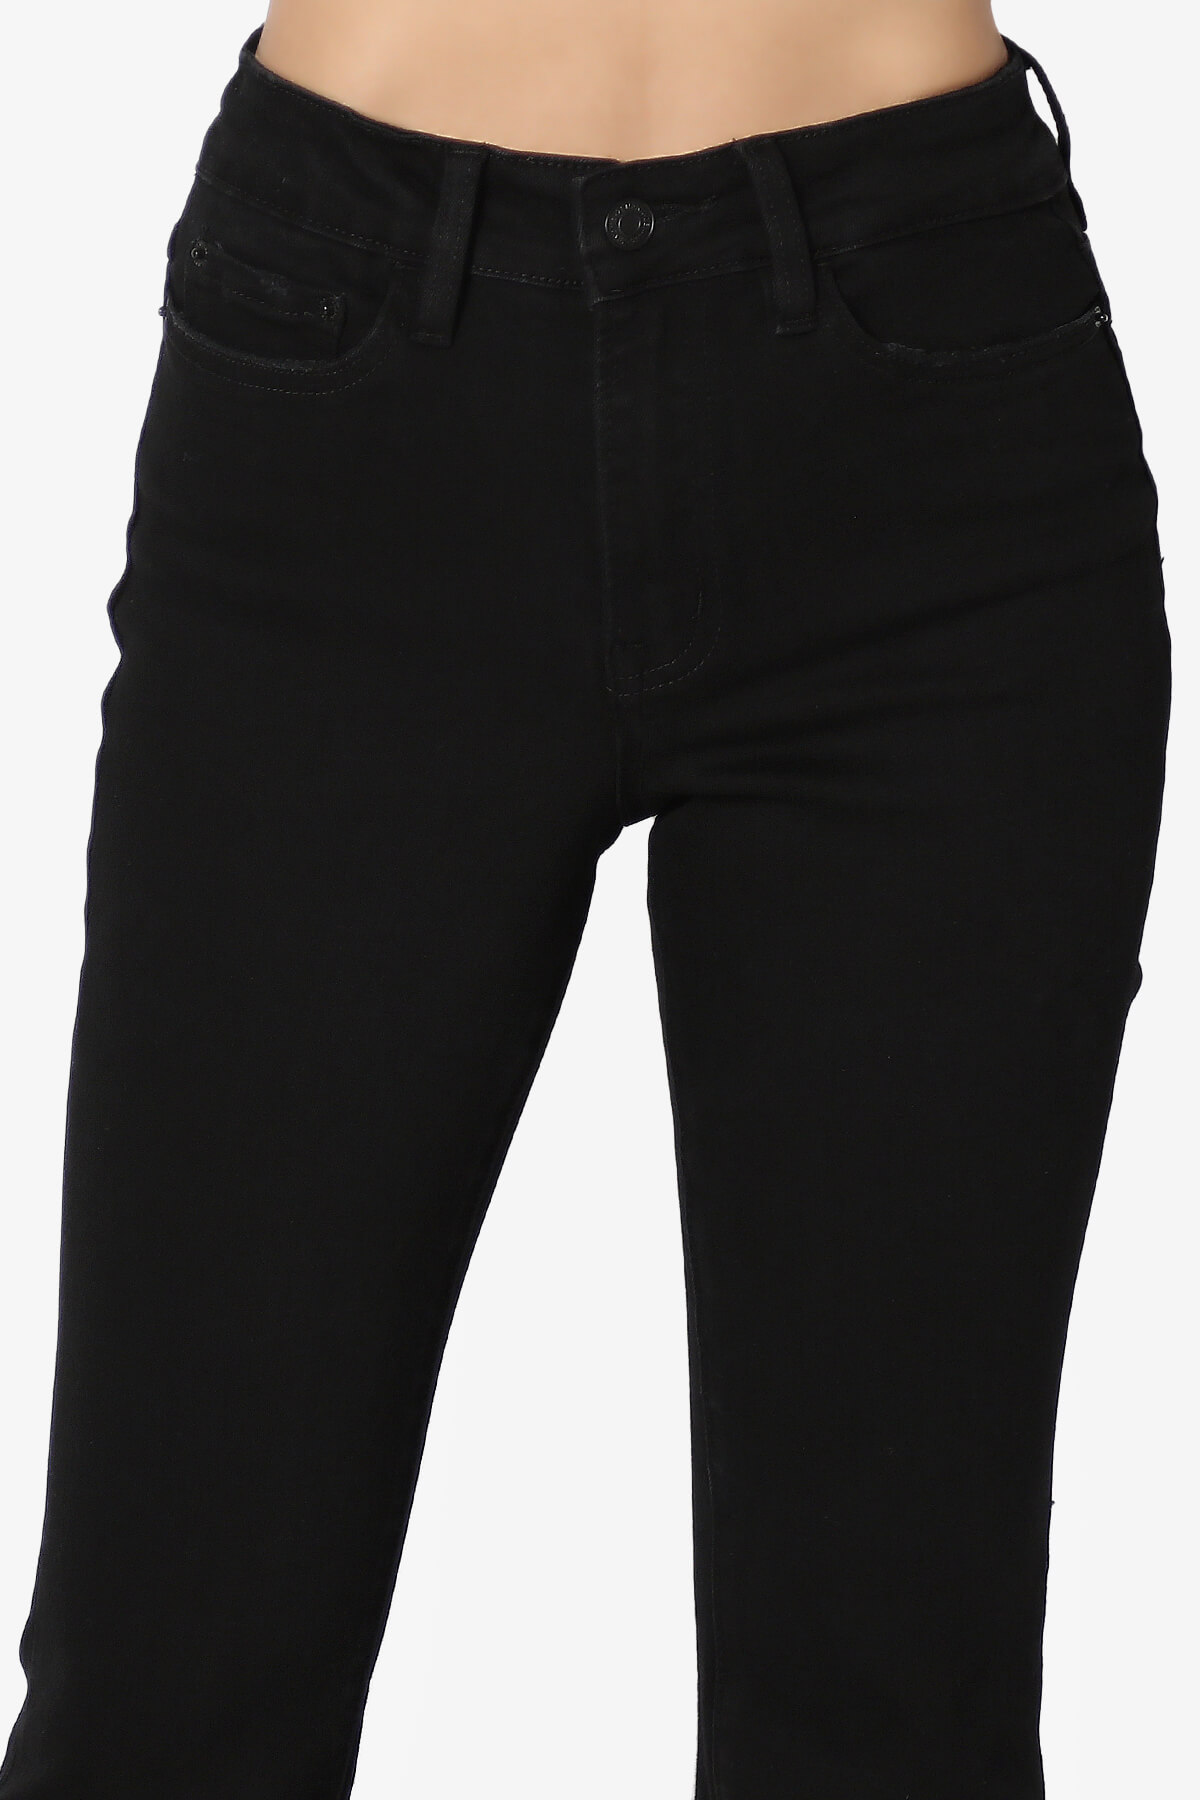 TheMogan Women's TALL High Rise Waist Flare Leg Jeans Black Bell Bottom Denim Pants